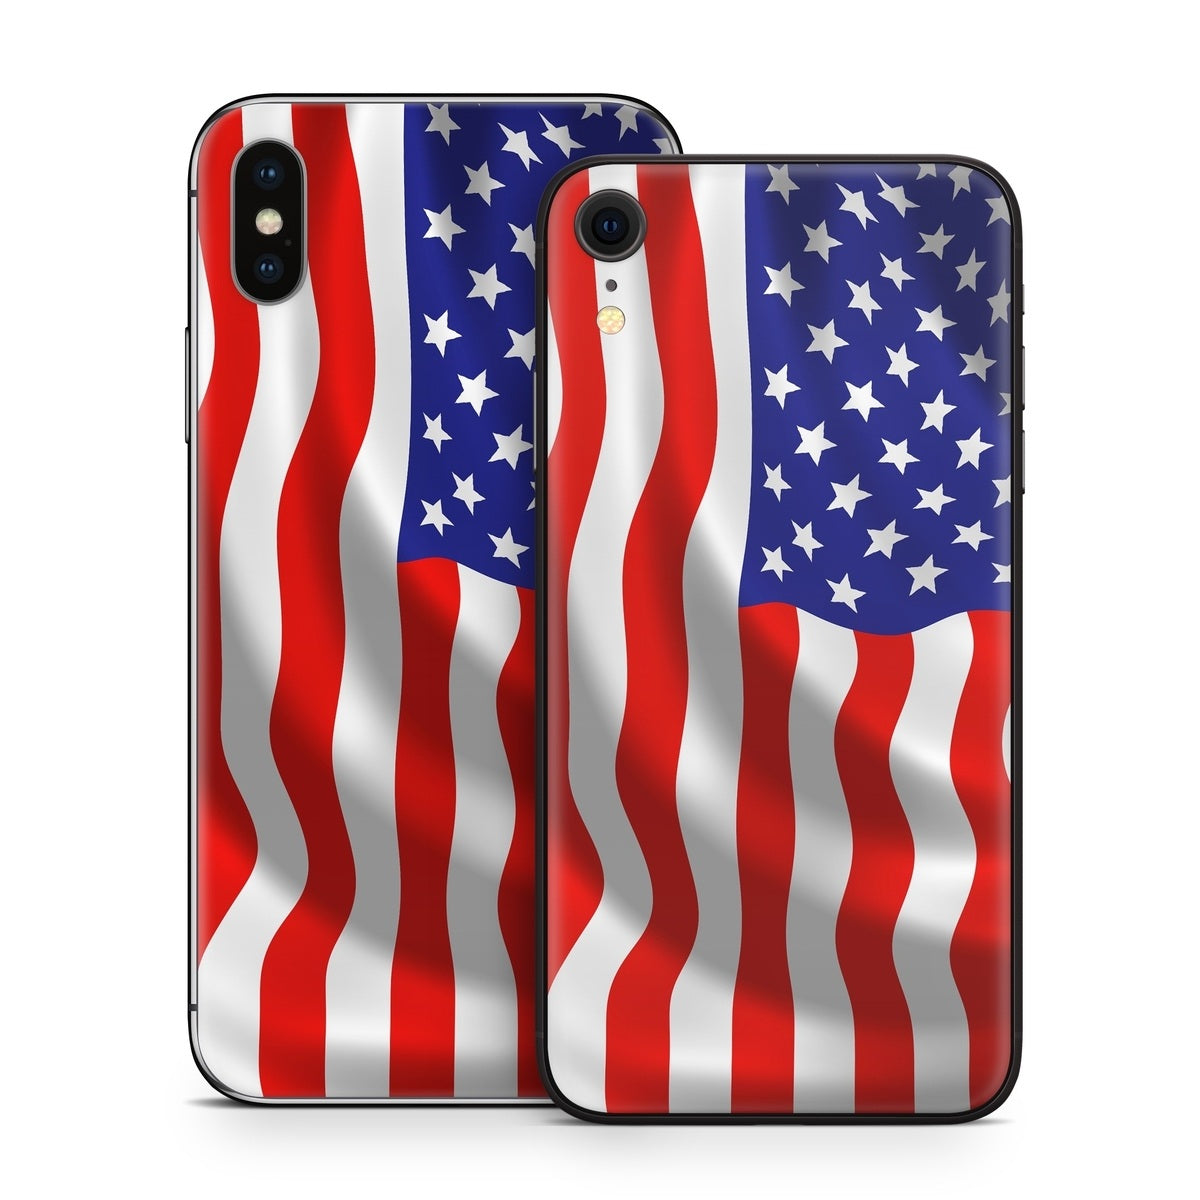 USA Flag - Apple iPhone X Skin